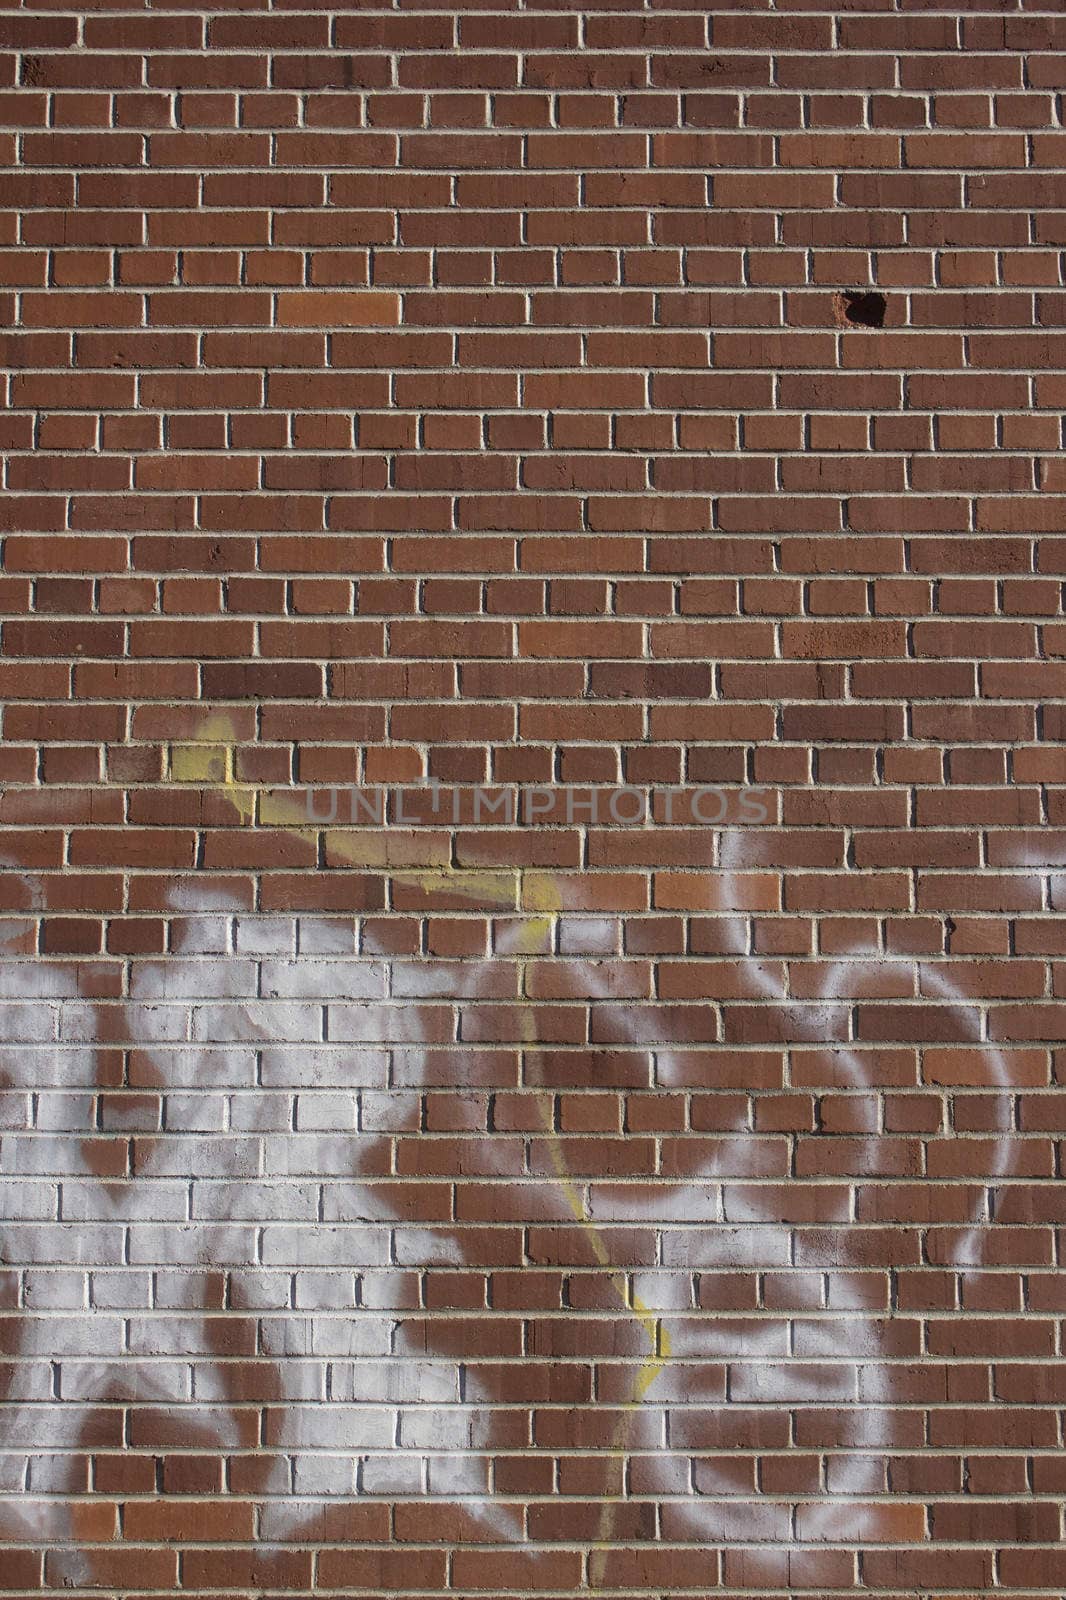 Large brick wall with graffiti by jeremywhat